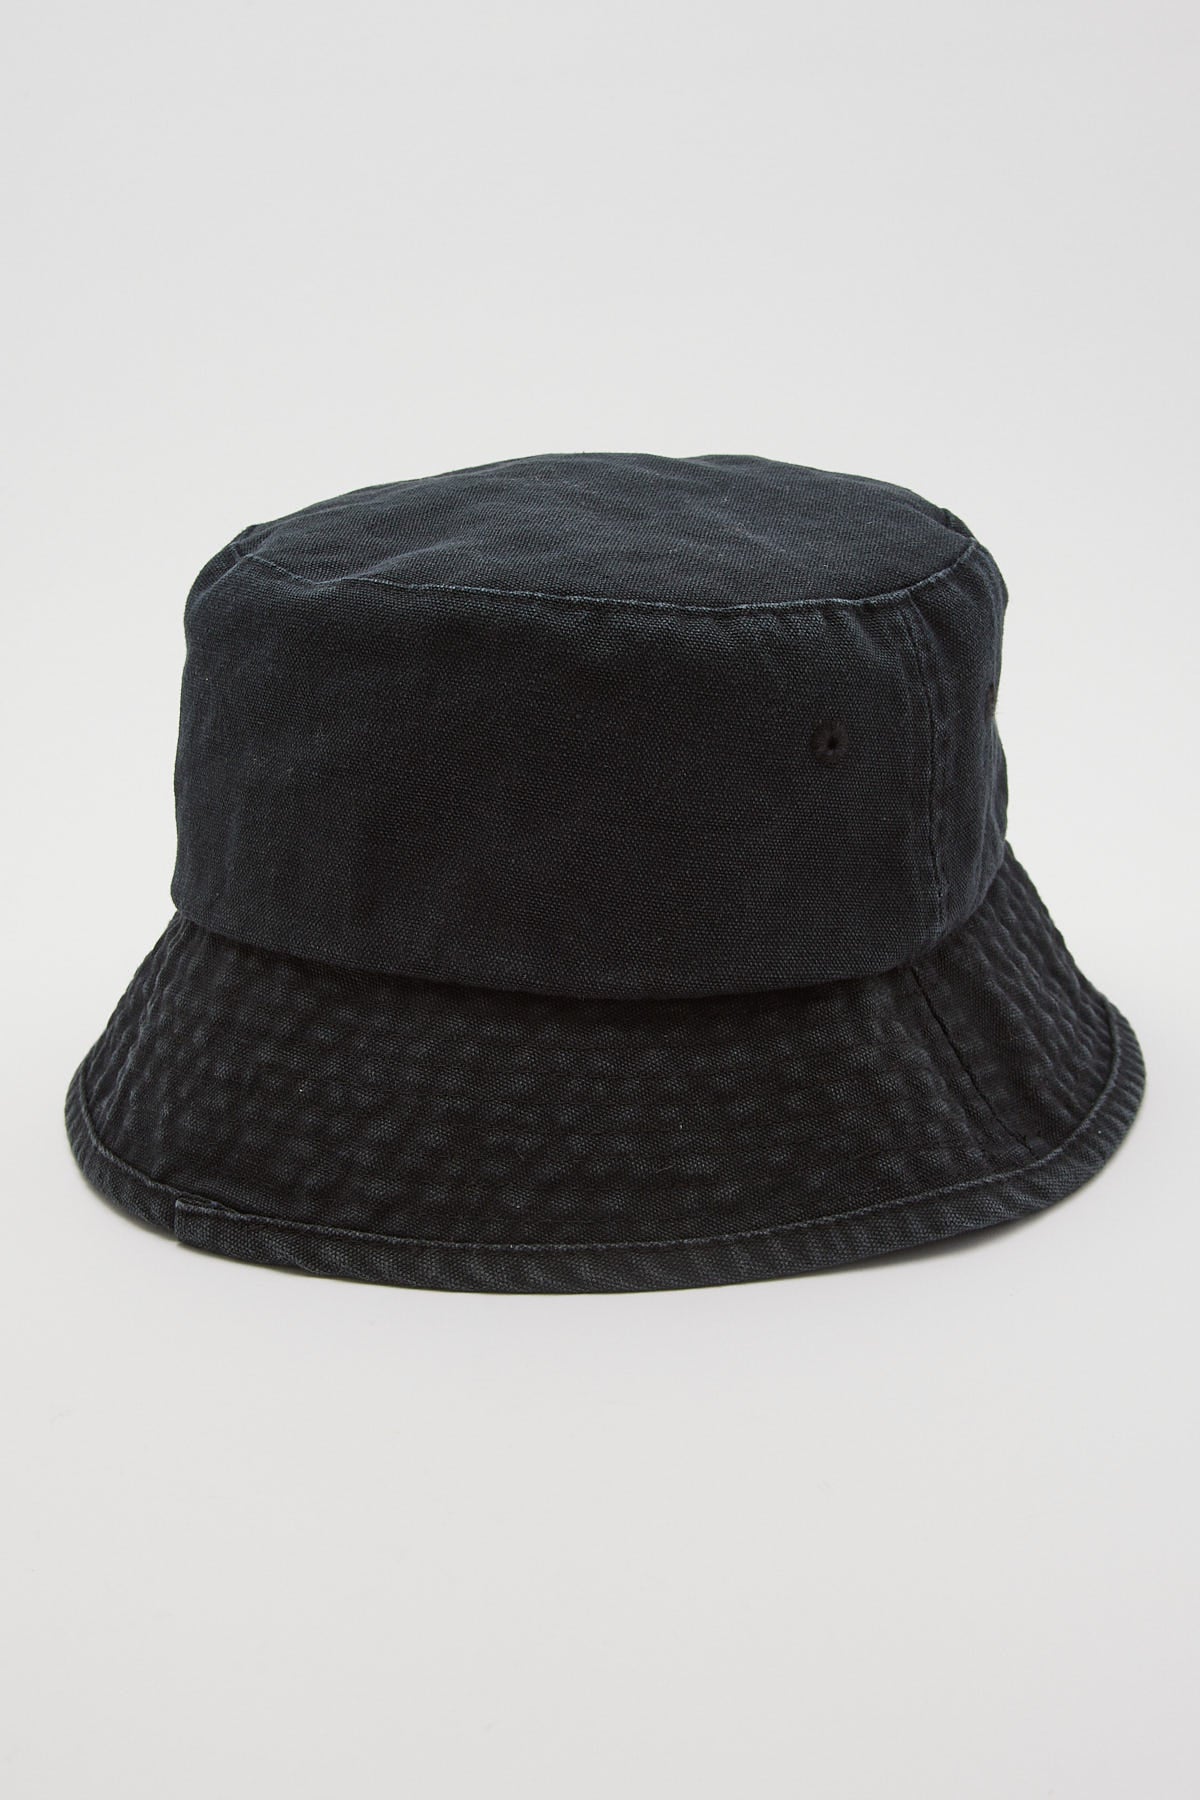 Thrills Minimal Thrills Bucket Hat Black